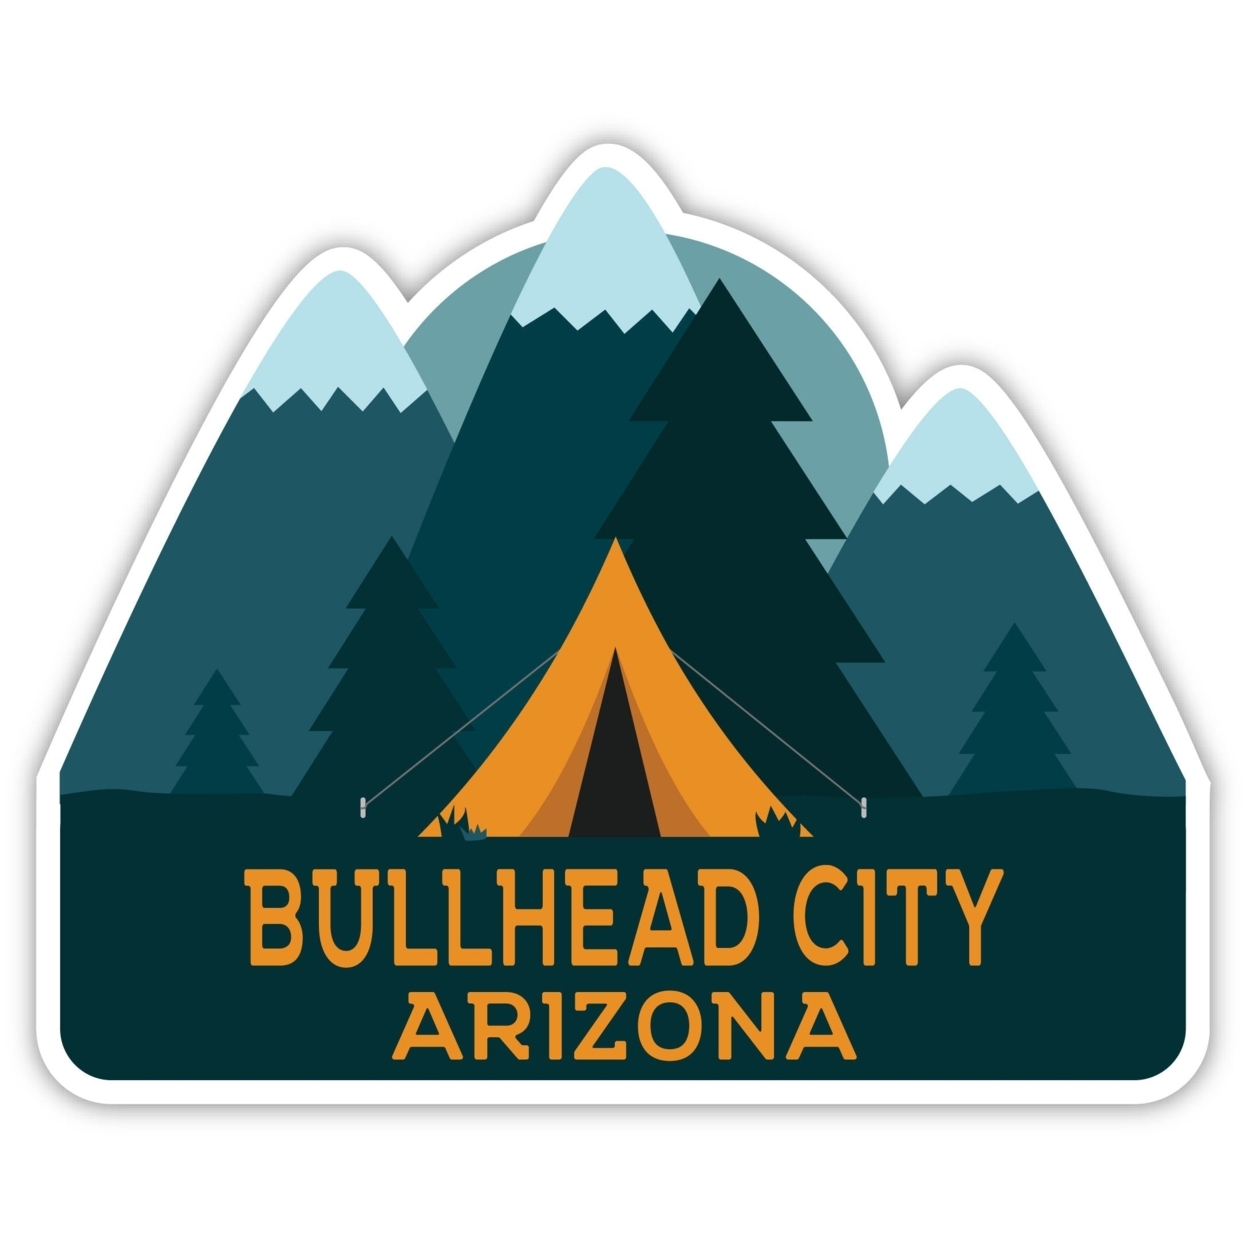 Bullhead City Arizona Souvenir Decorative Stickers (Choose Theme And Size) - 4-Pack, 6-Inch, Camp Life